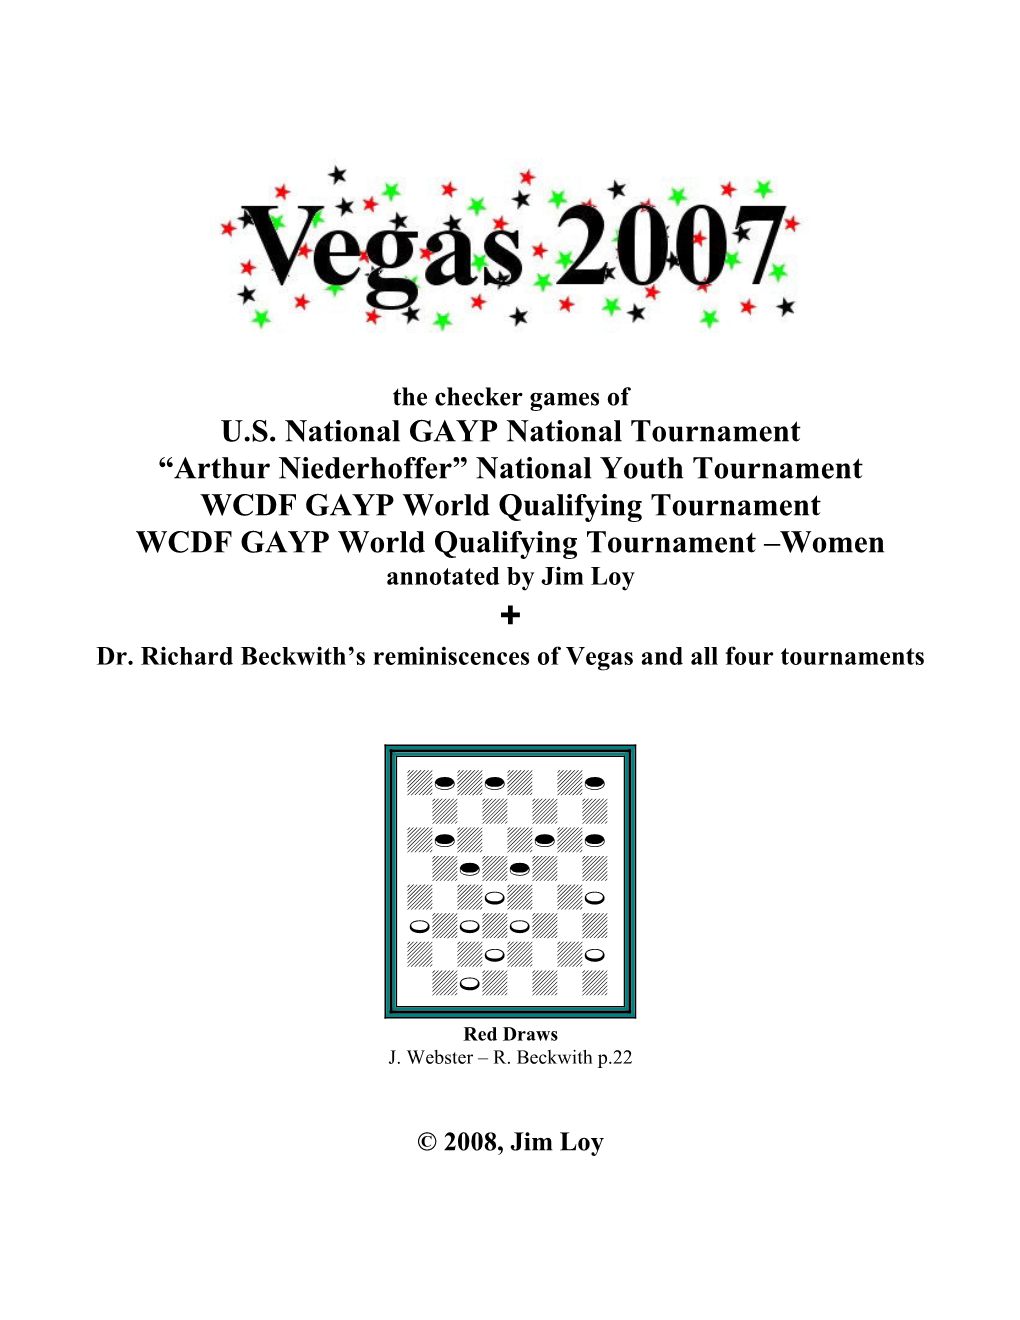 U.S. National GAYP National Tournament “Arthur Niederhoffer